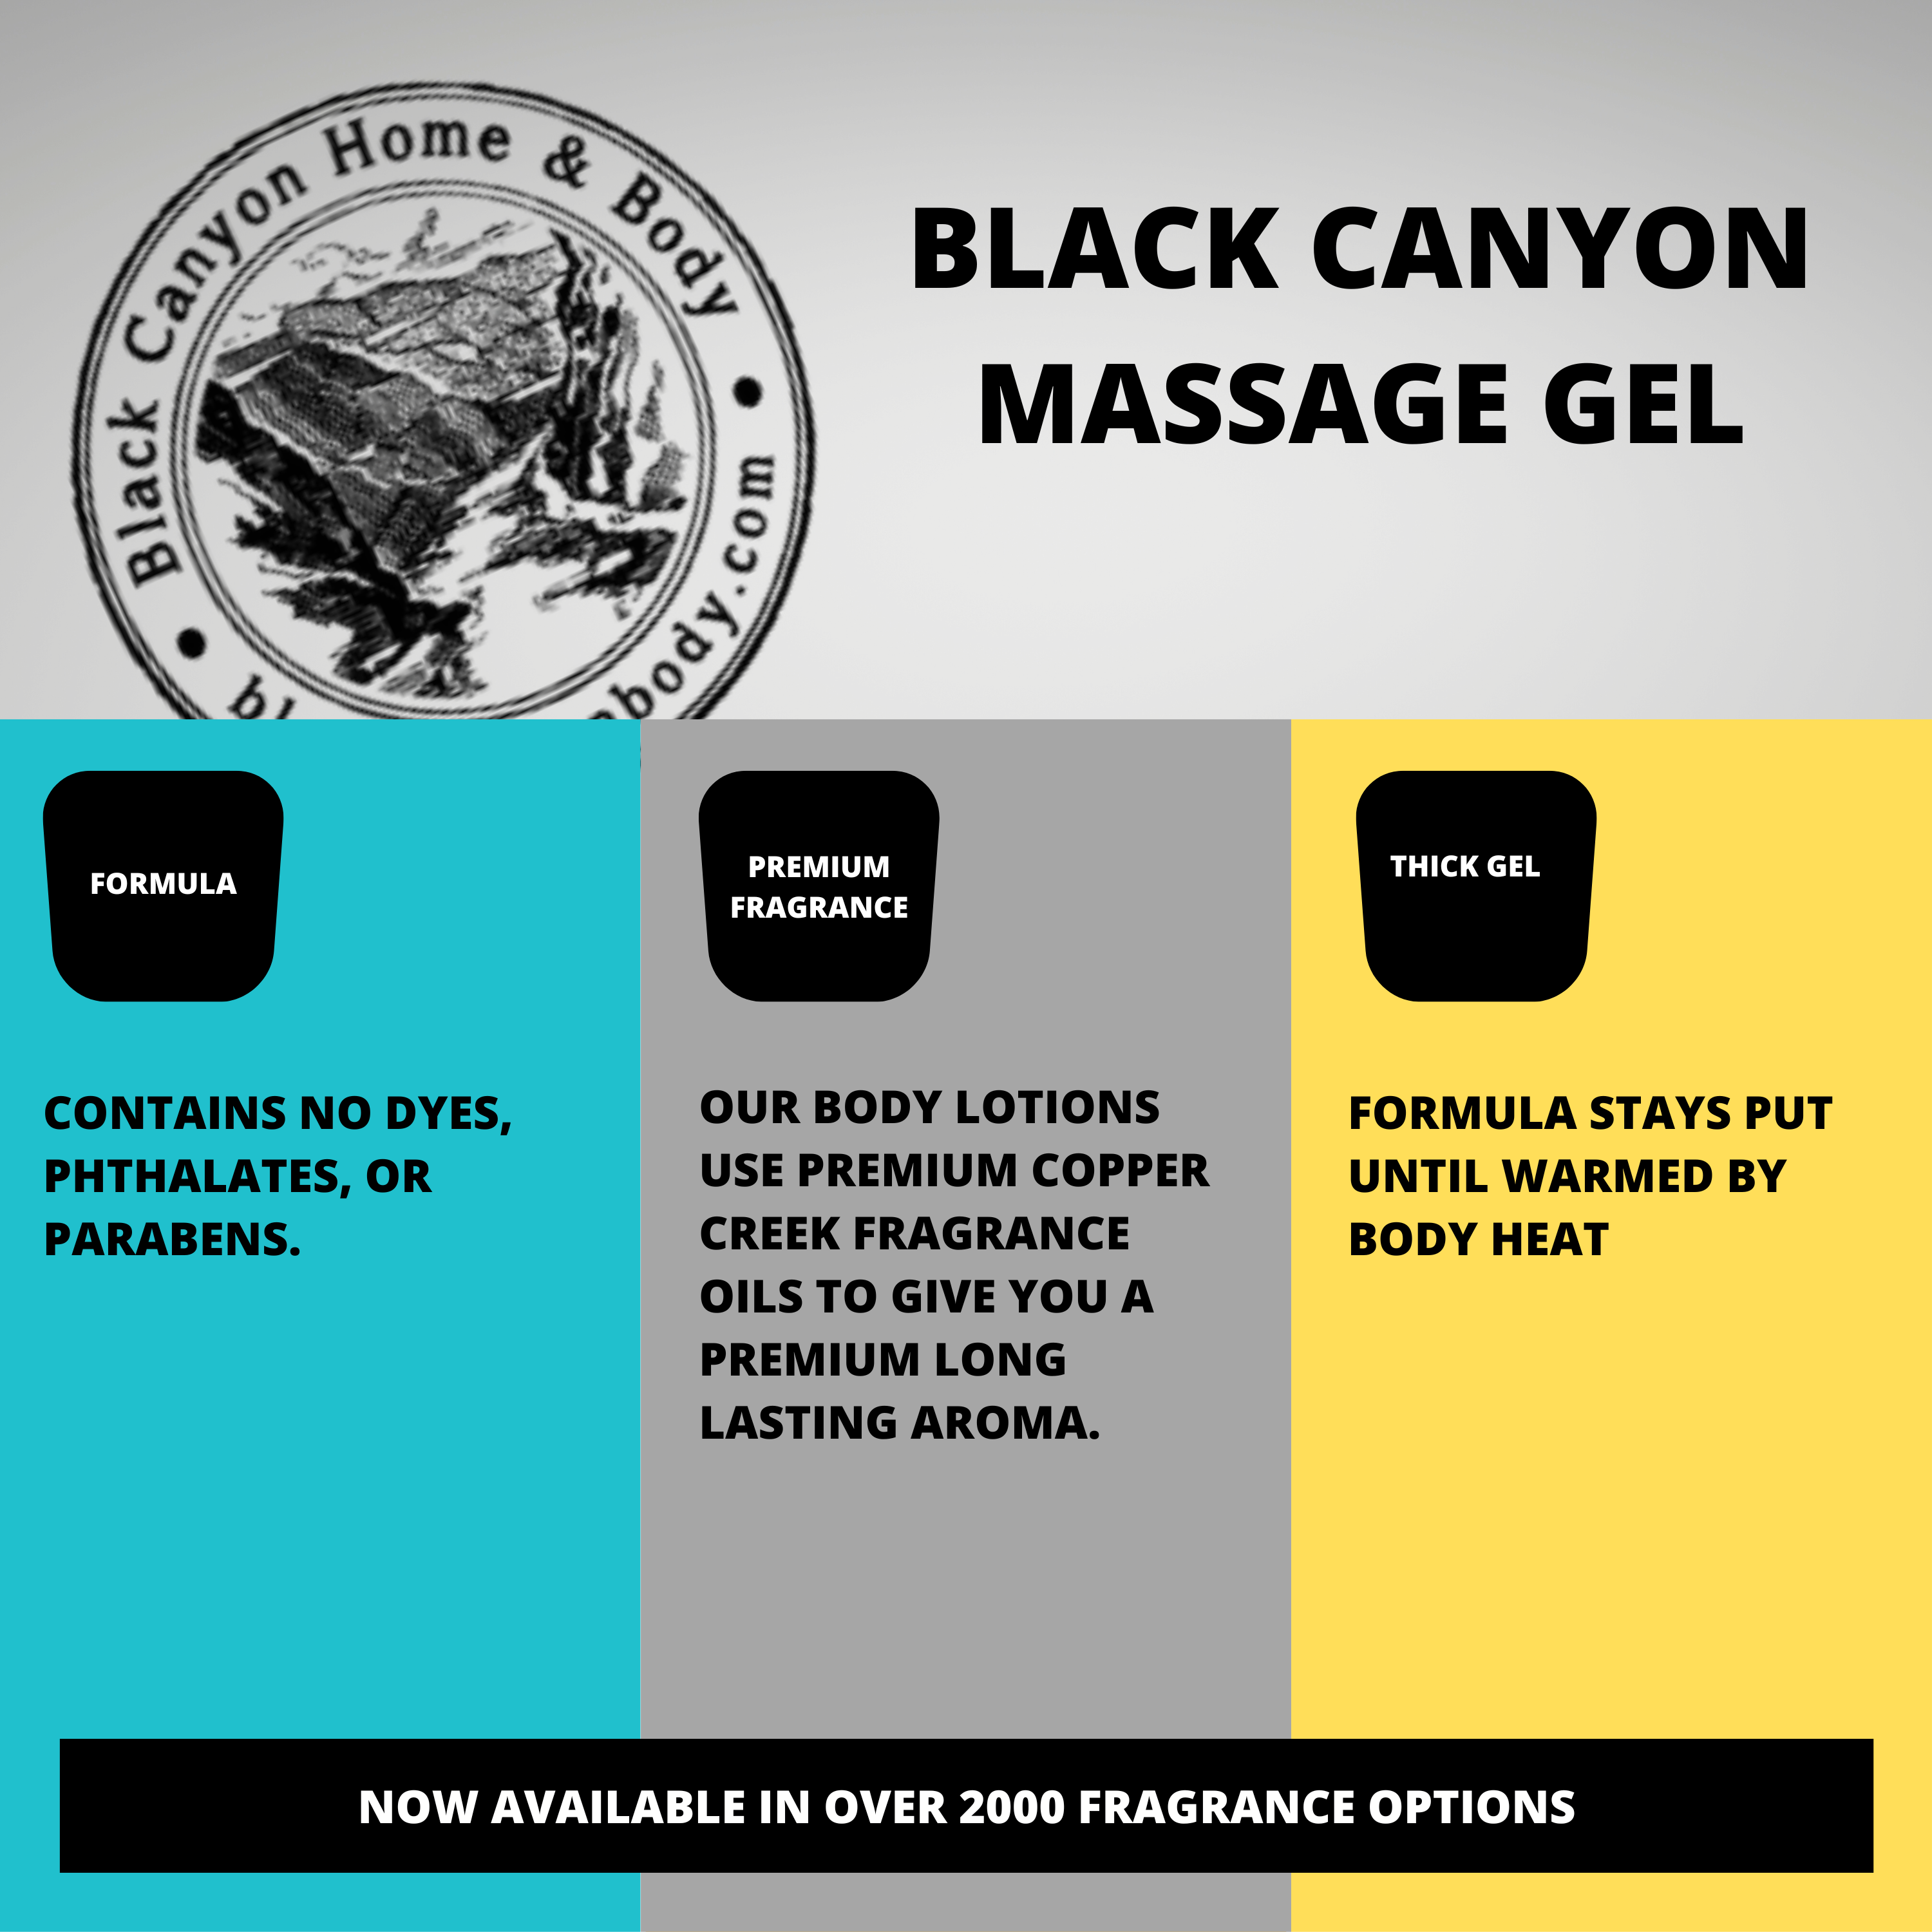 Black Canyon Black Cherry Cream Scented Massage Gel